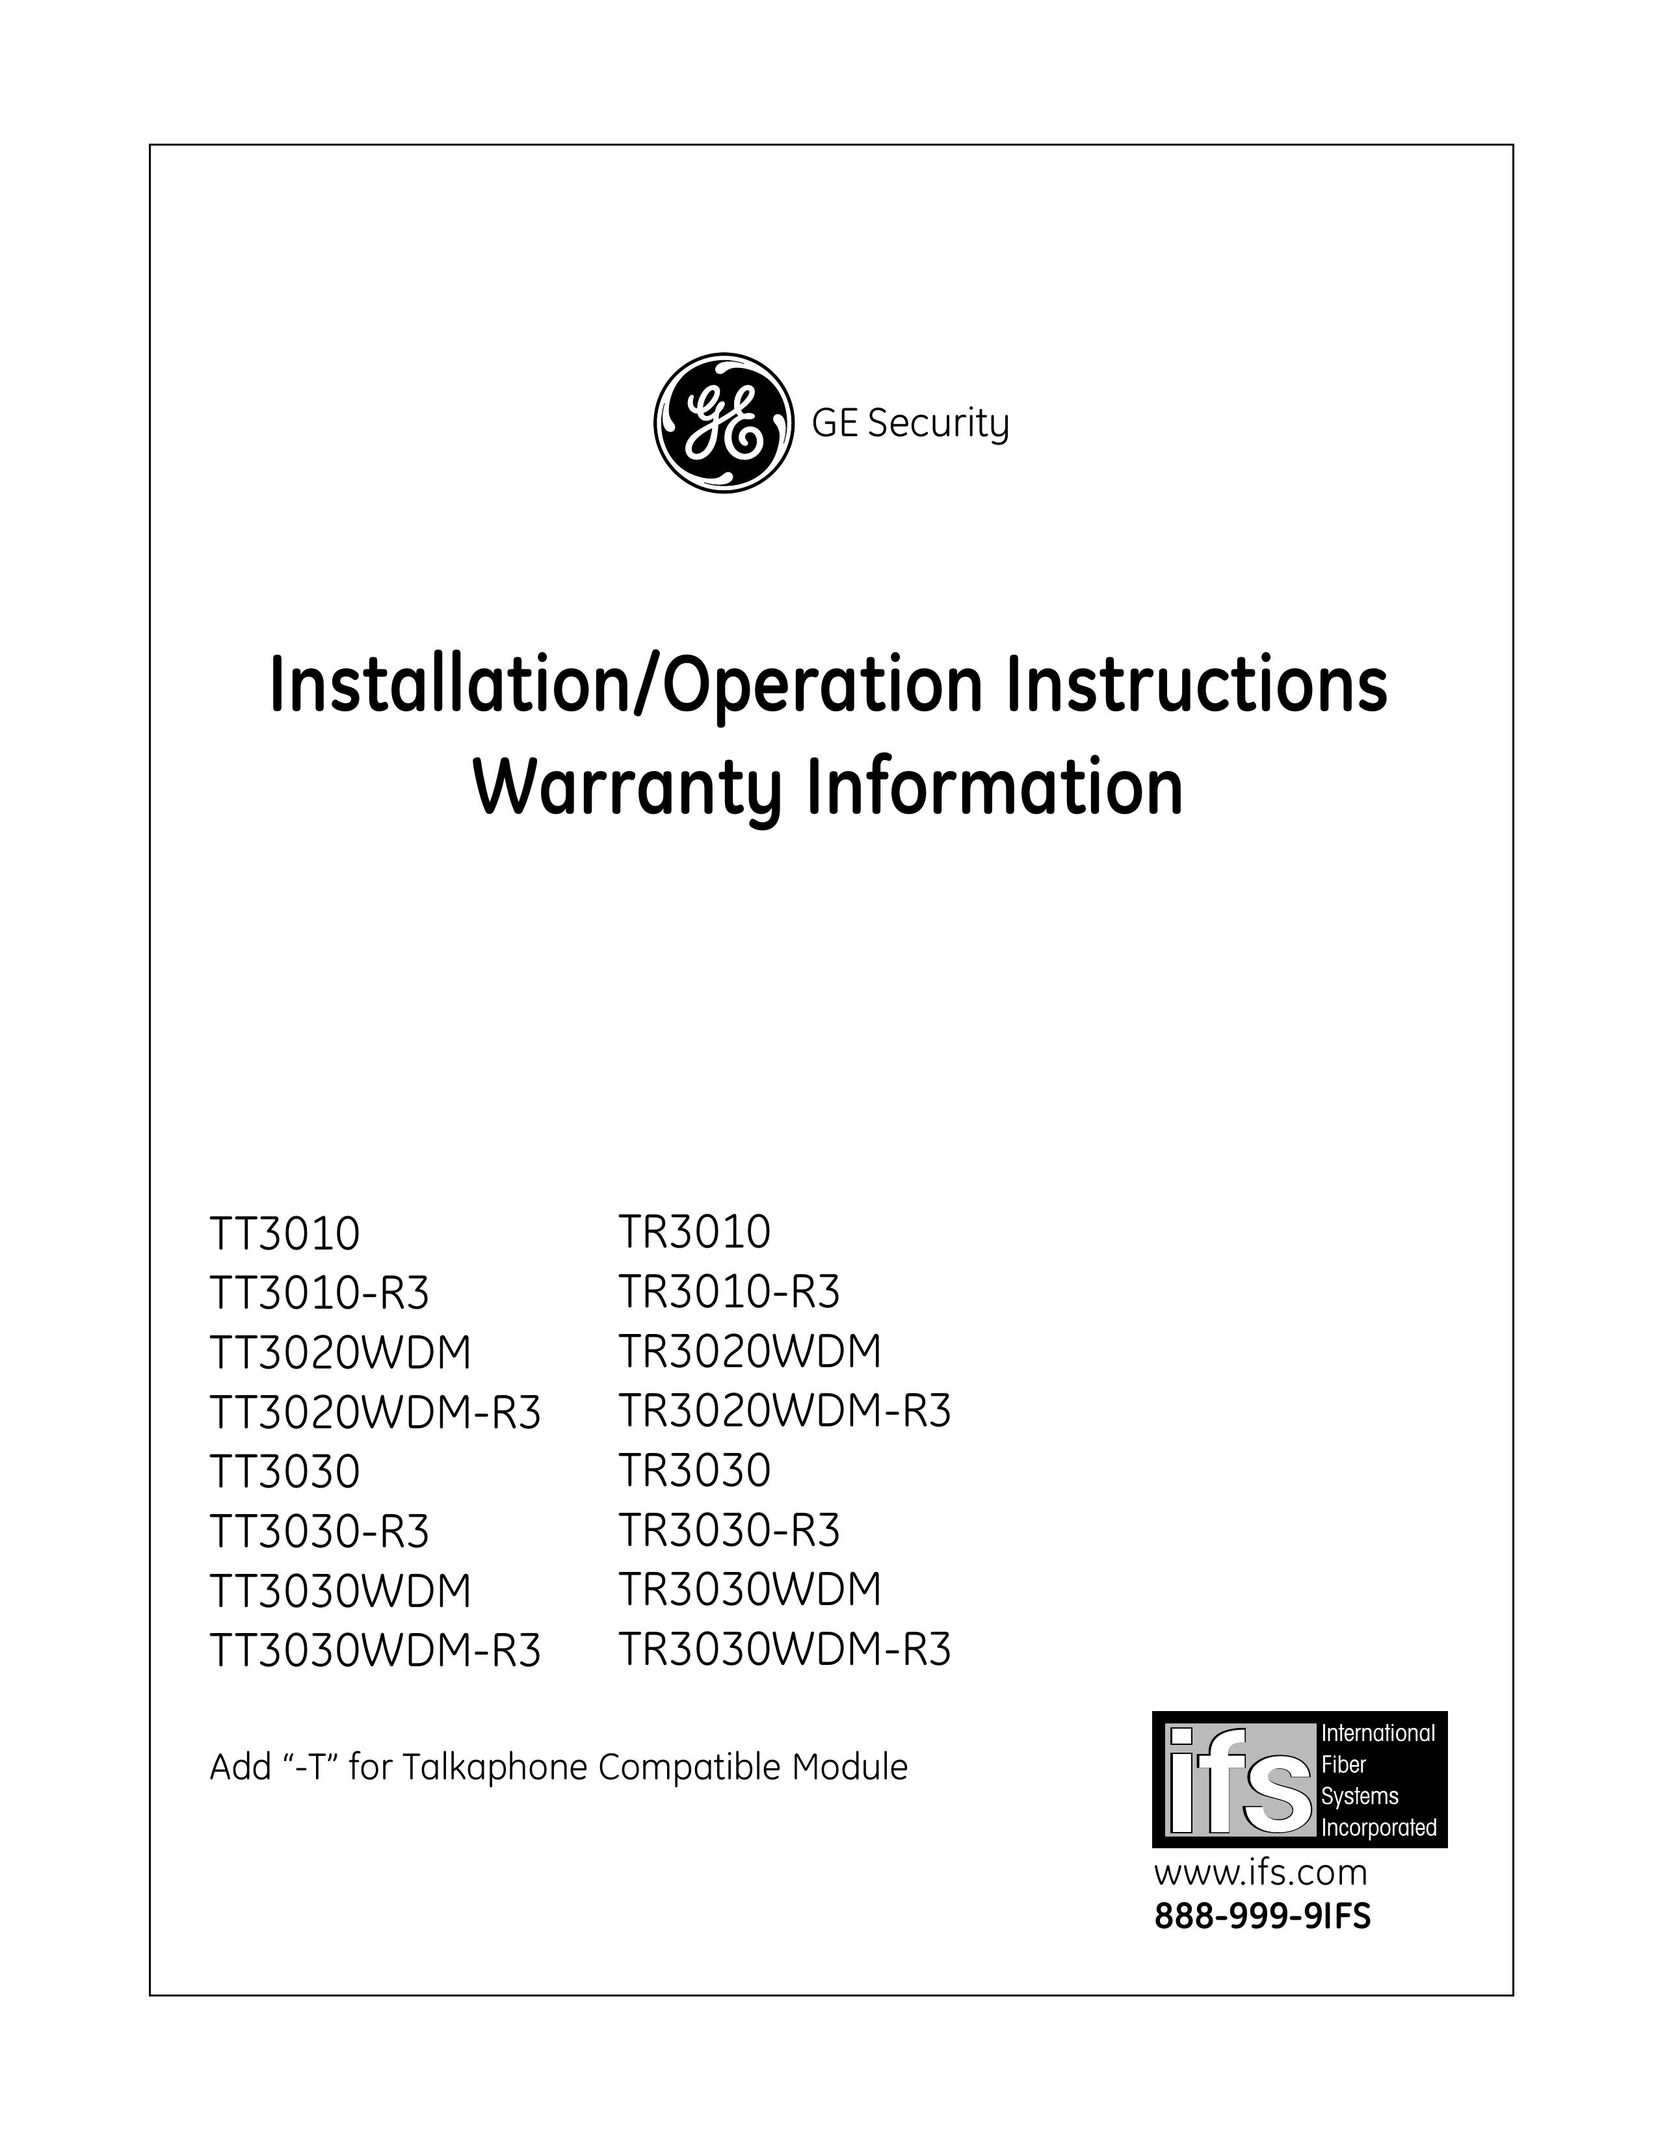 GE TR3030WDM Telephone Accessories User Manual